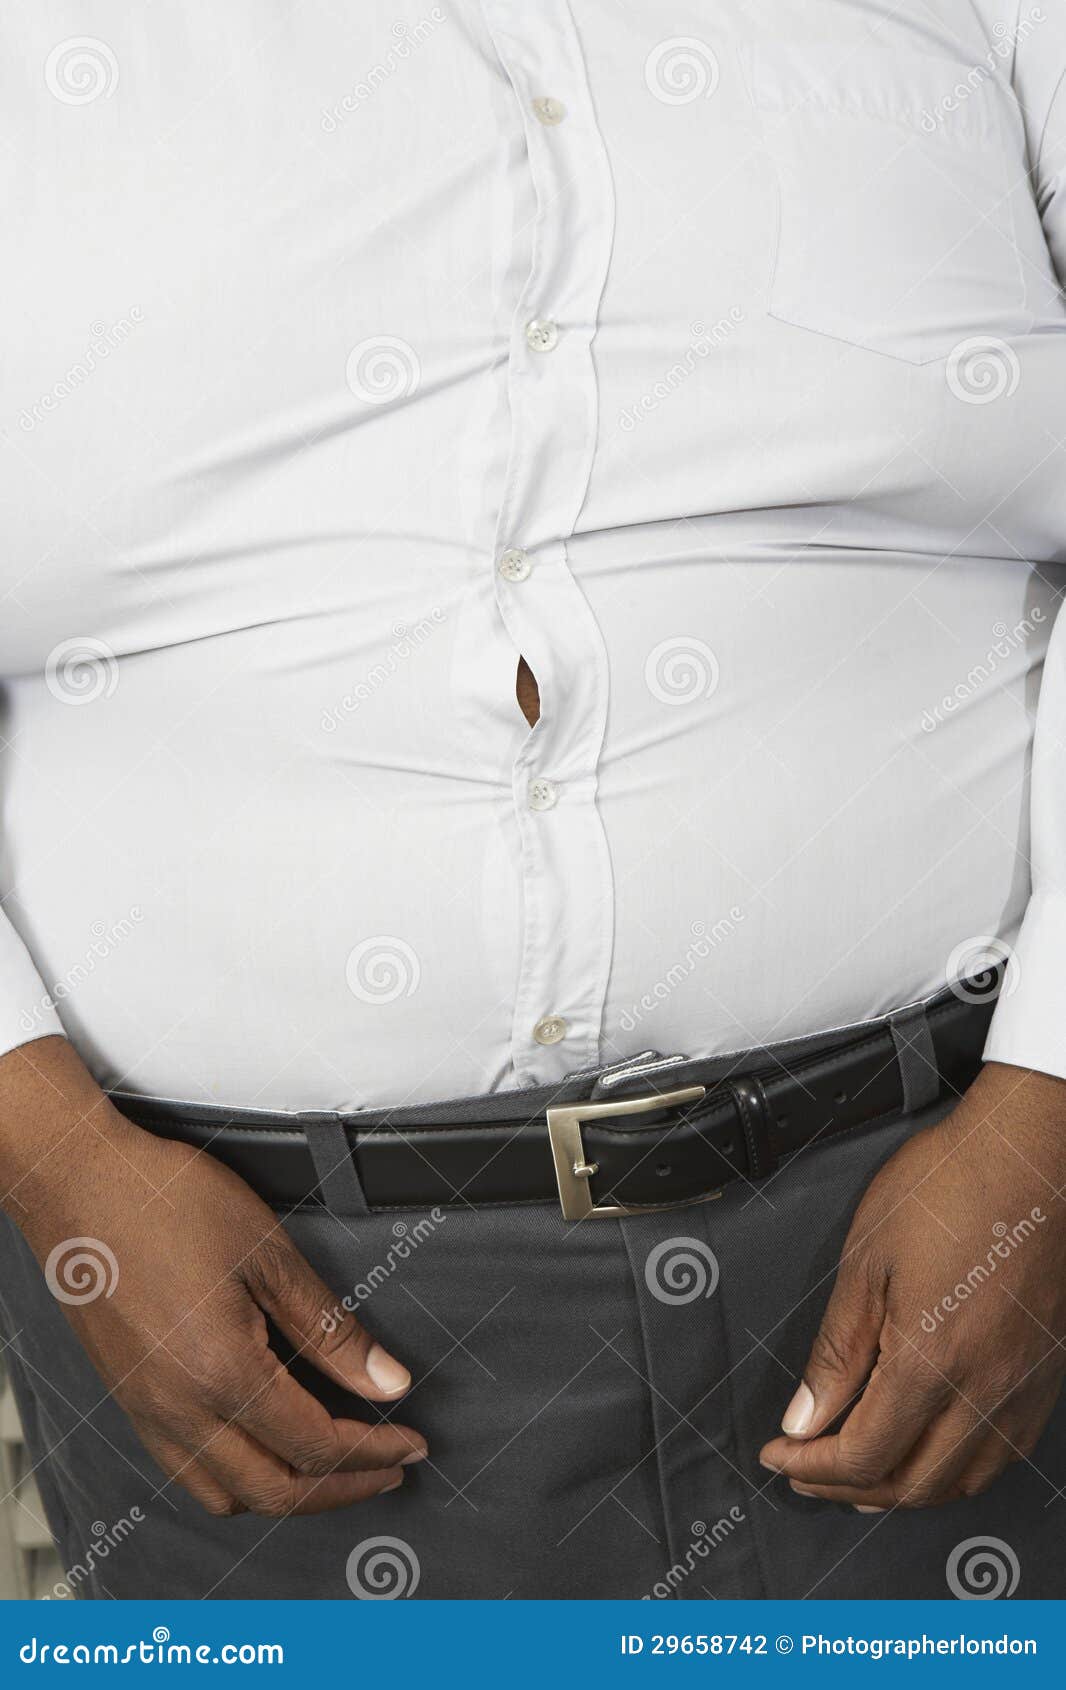 183 Fat Man Tight Button Stock Photos - Free & Royalty-Free Stock